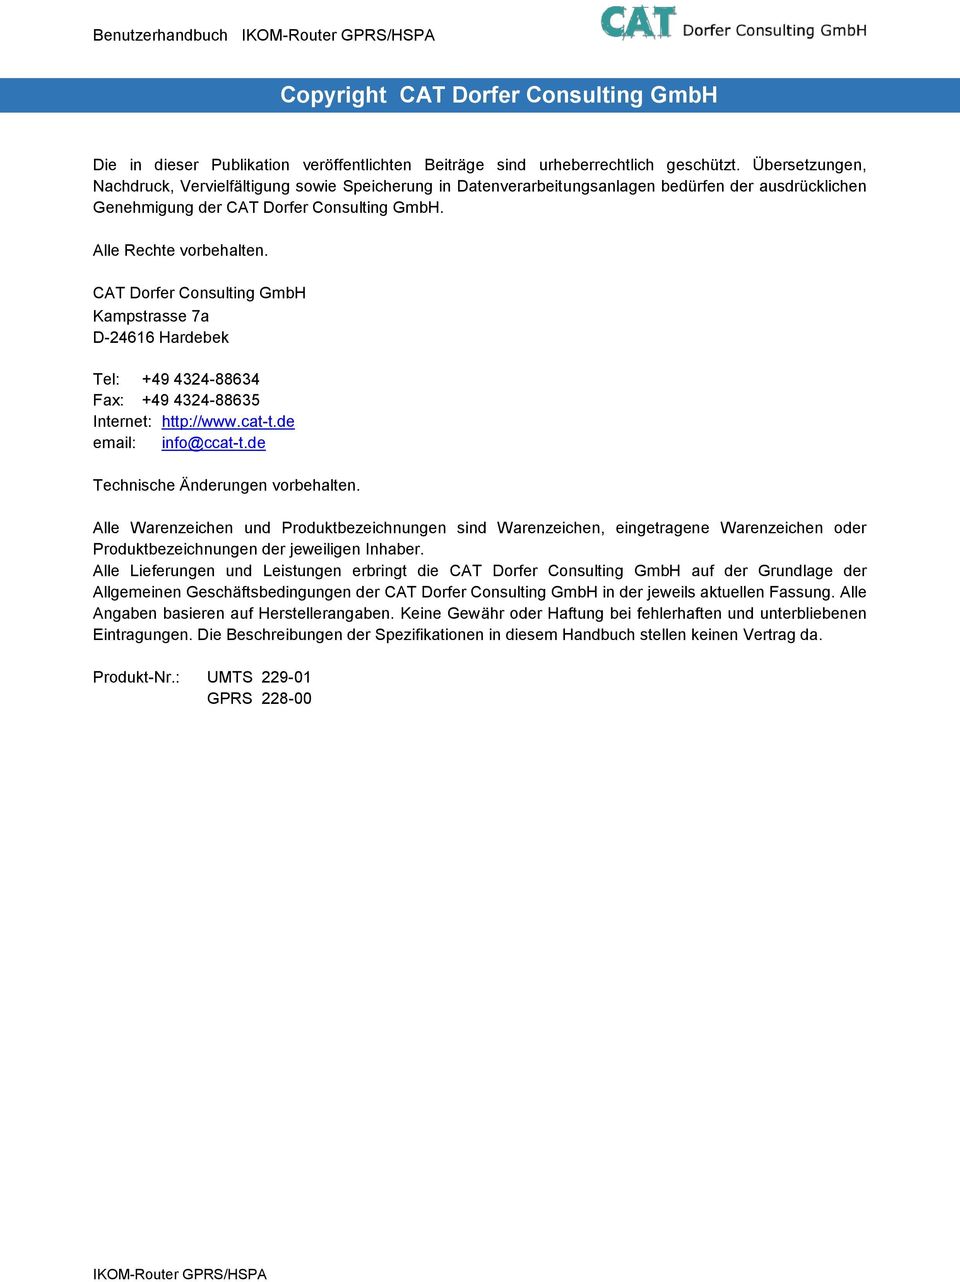 CAT Dorfer Consulting GmbH Kampstrasse 7a D-24616 Hardebek Tel: +49 4324-88634 Fax: +49 4324-88635 Internet: http://www.cat-t.de email: info@ccat-t.de Technische Änderungen vorbehalten.